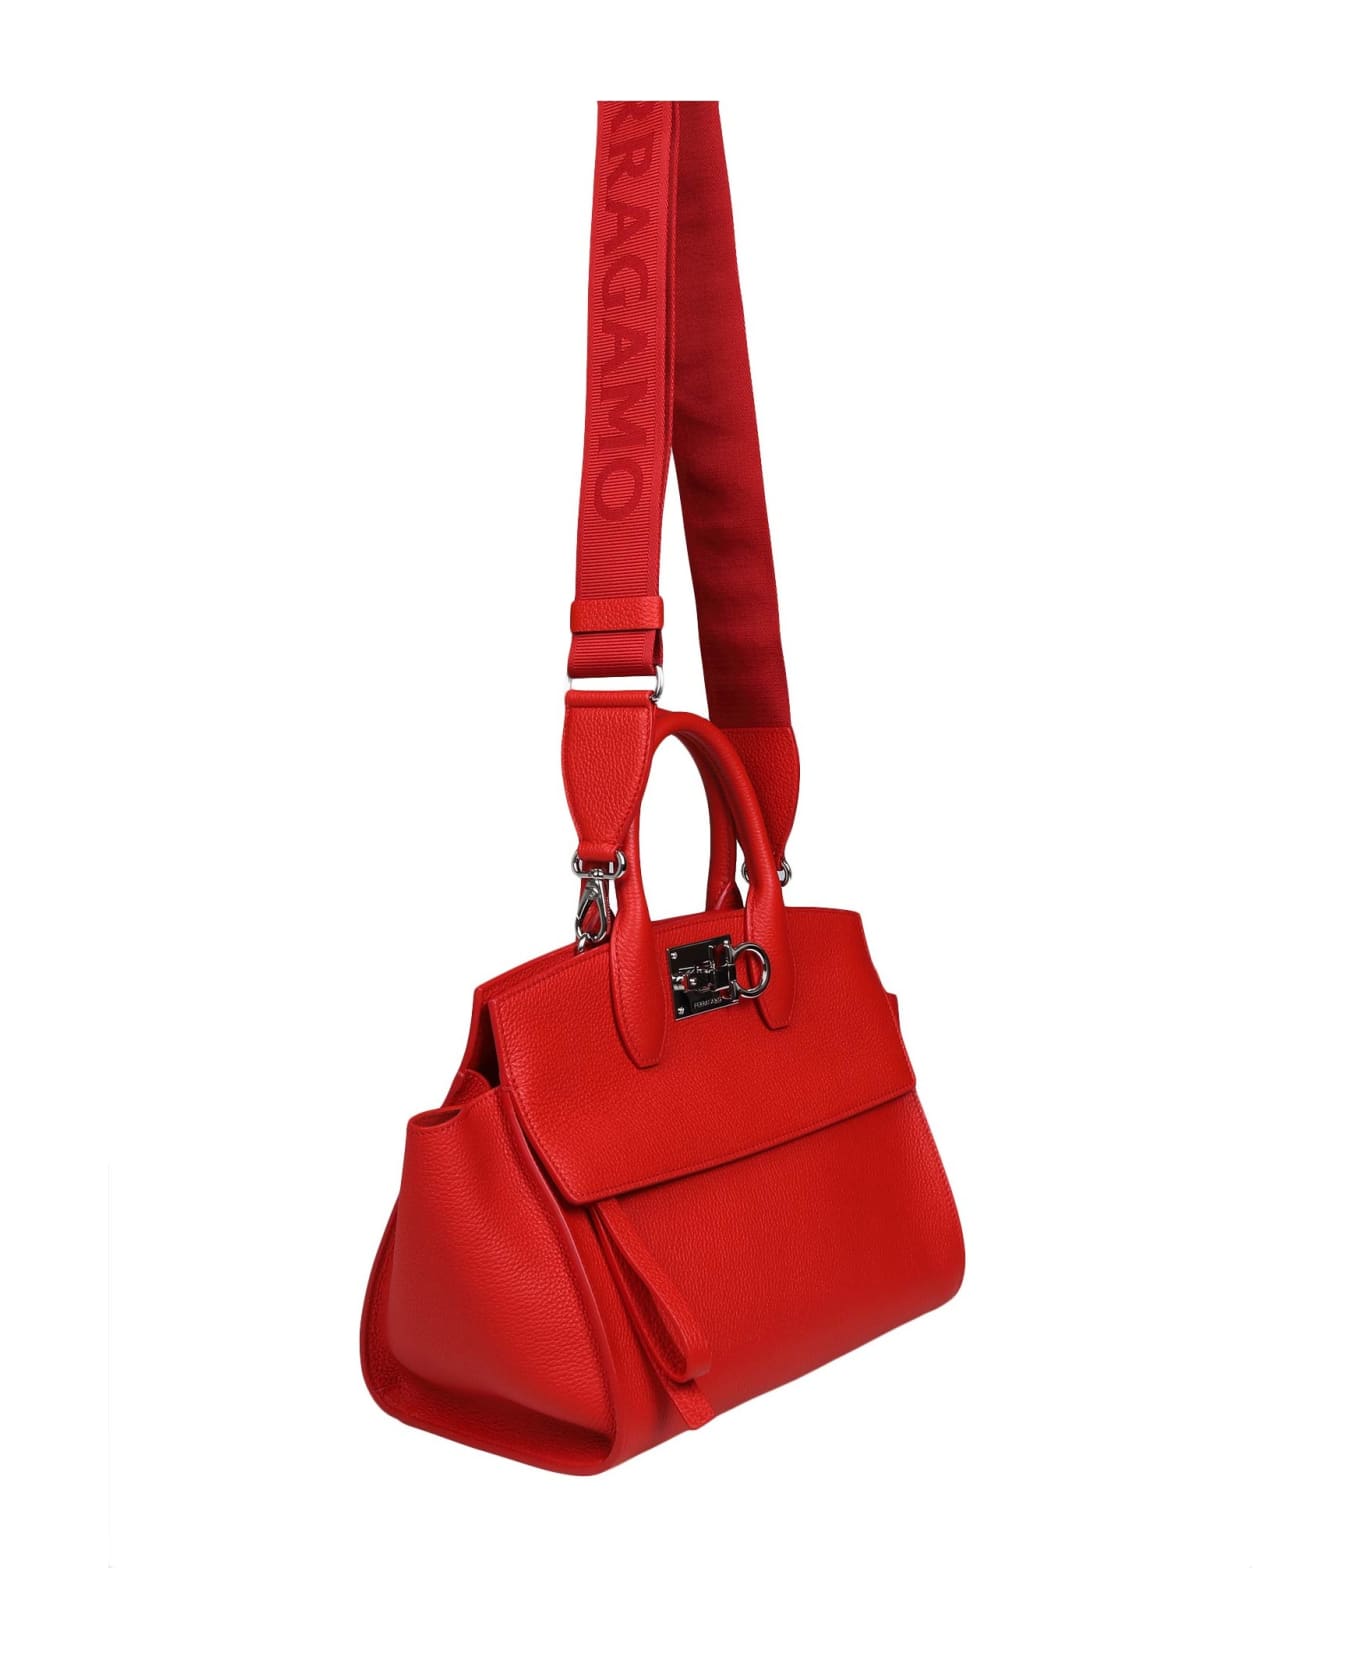 Ferragamo Studio Sof Leather Handbag - Flame Red  トートバッグ